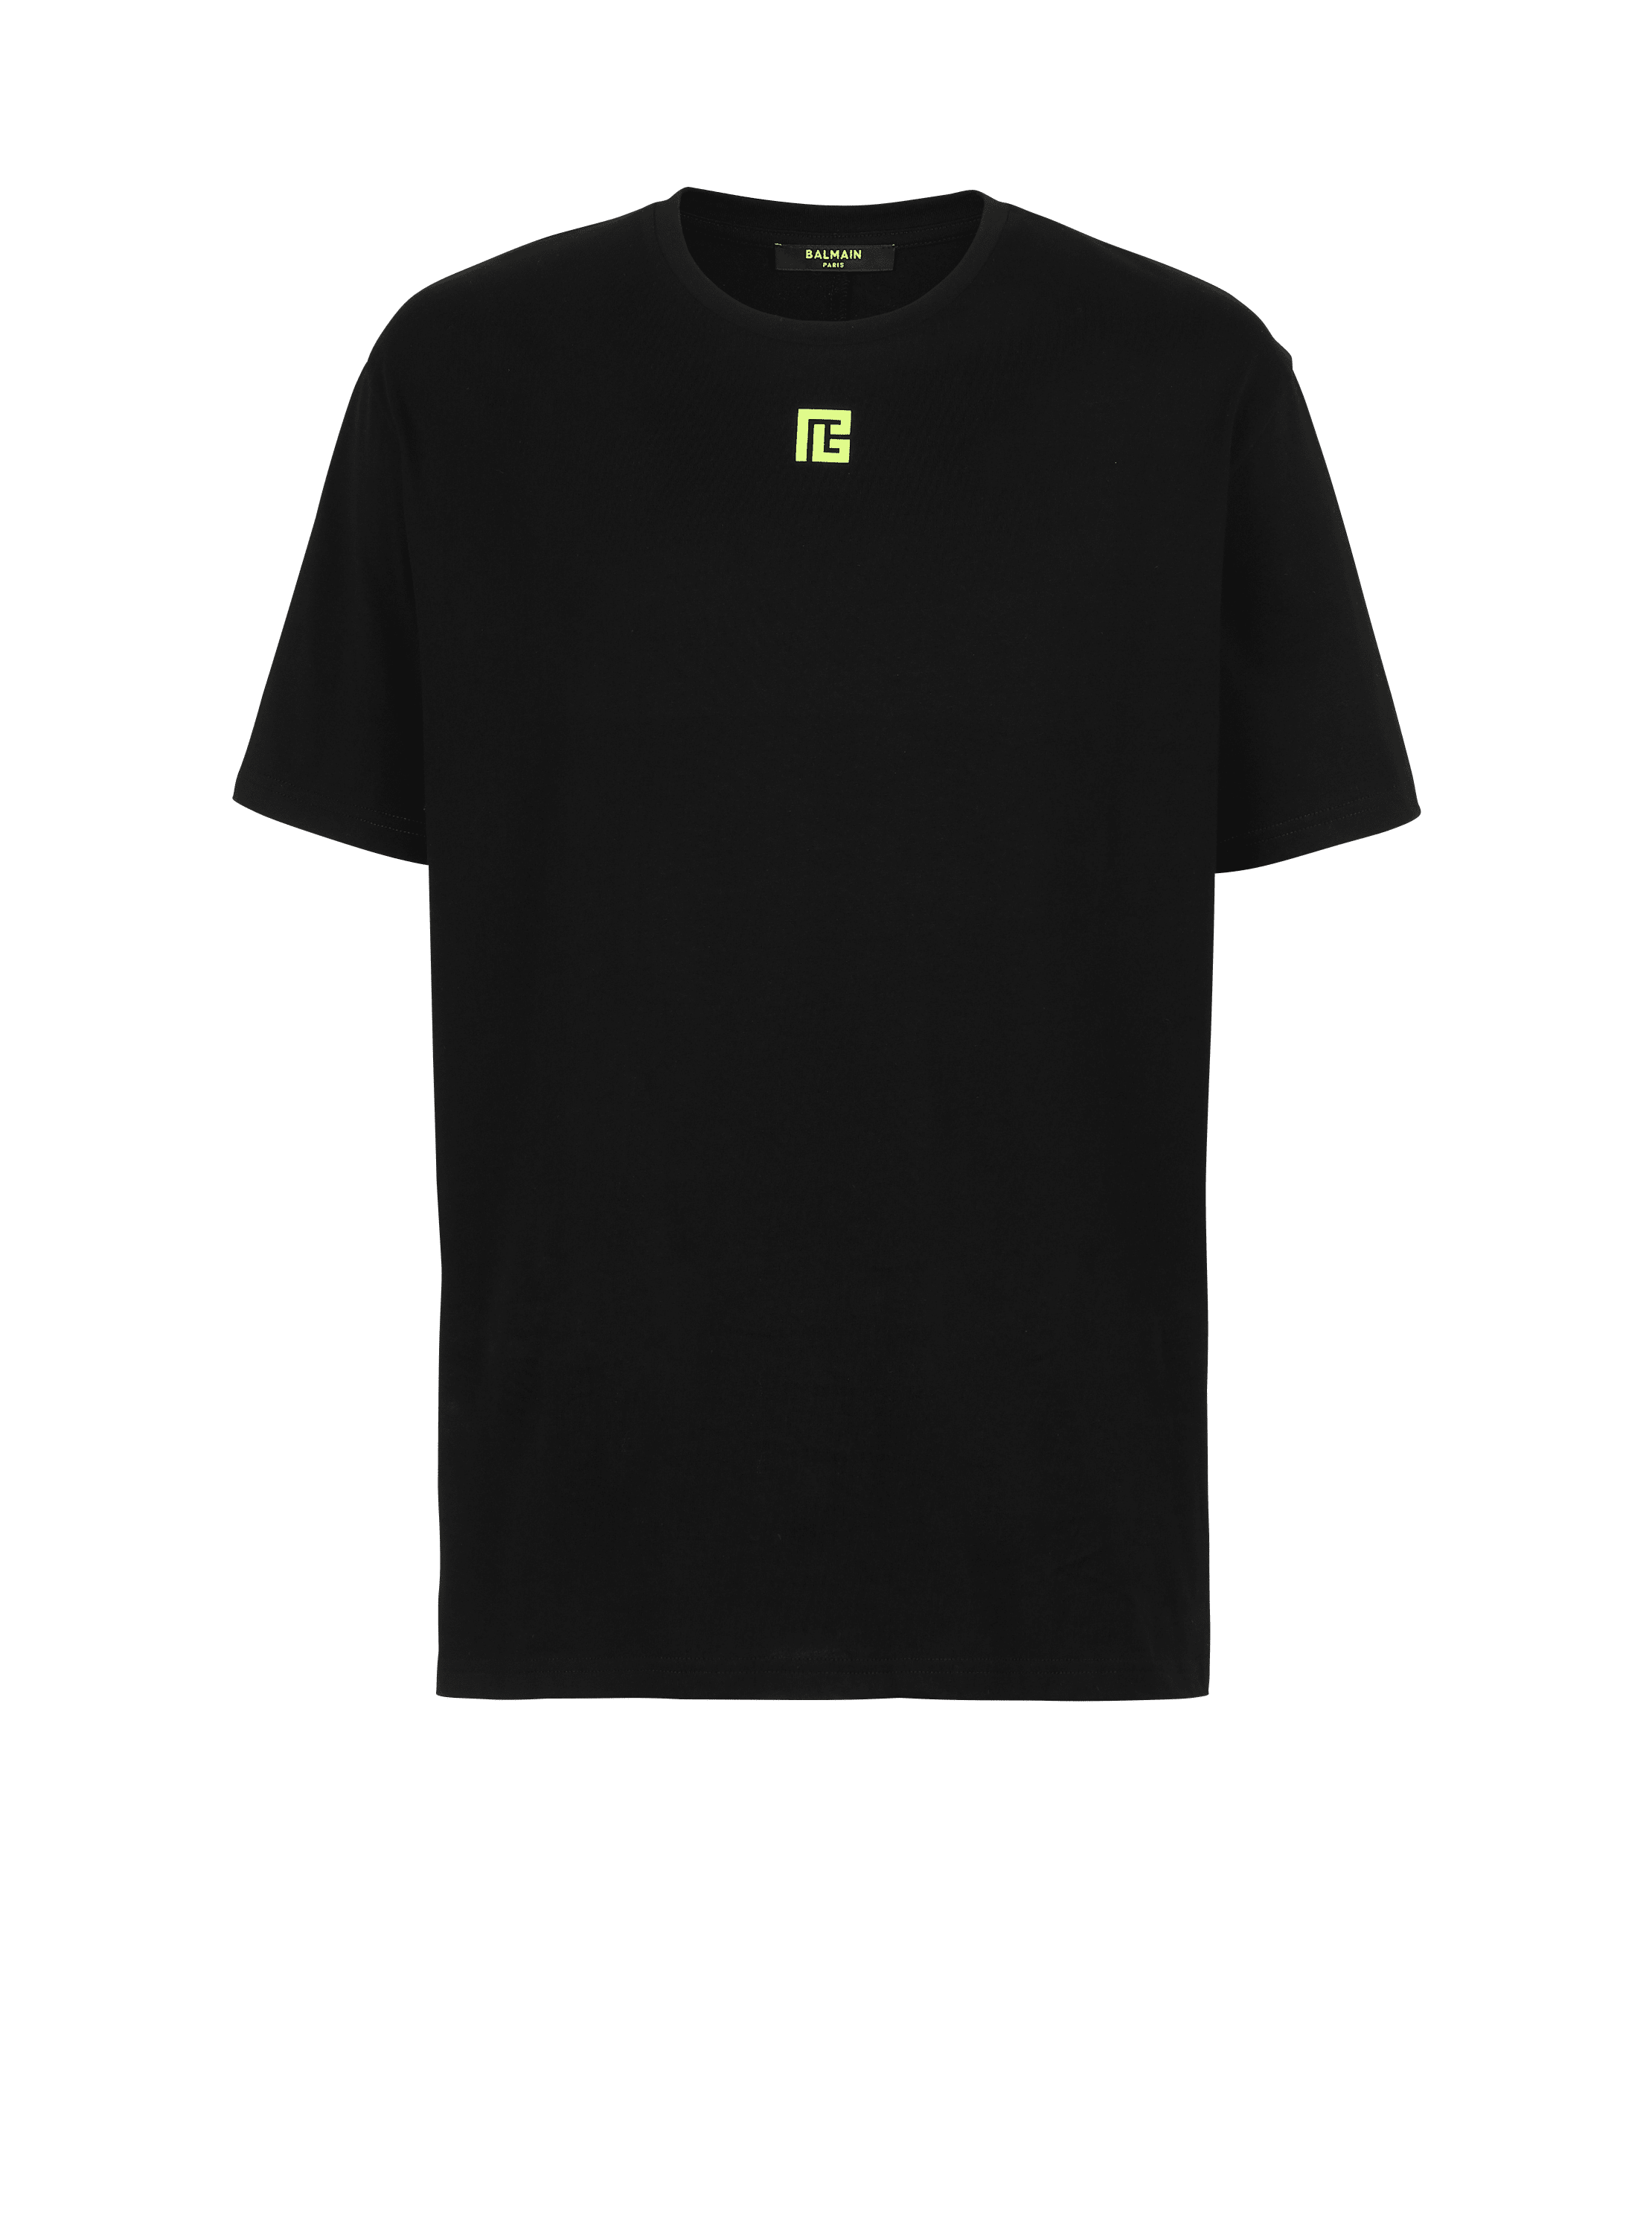 T-shirt oversize in cotone con maxi logo Balmain sul retro, nero, hi-res